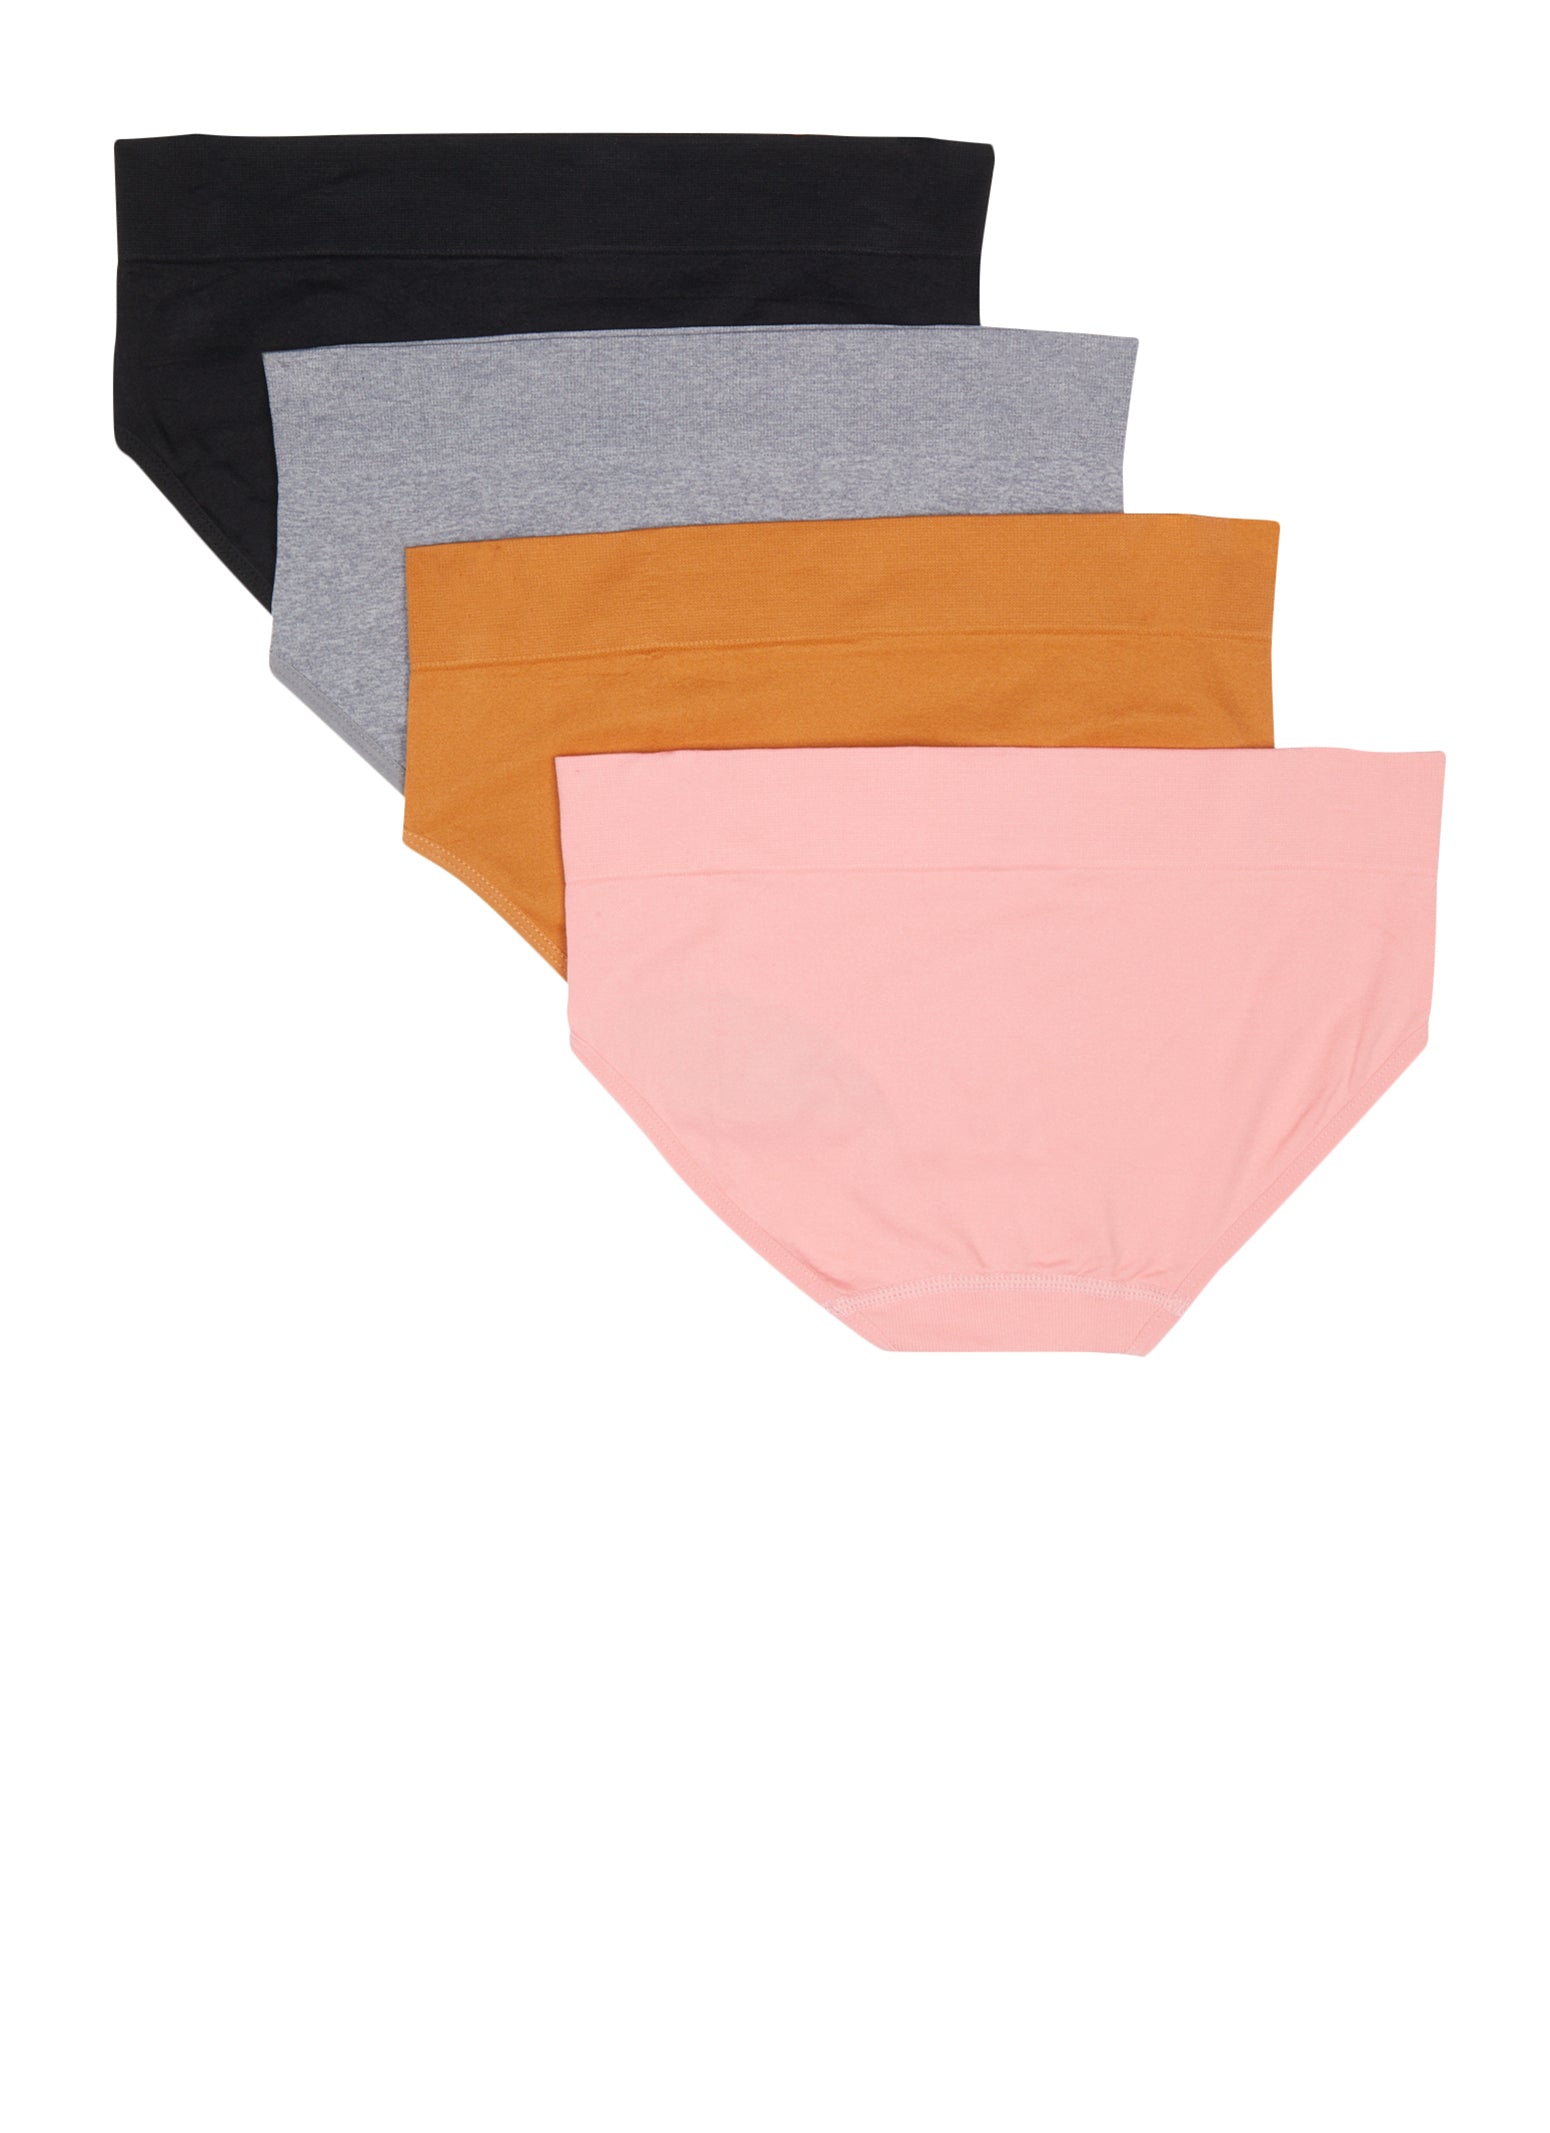 Bebe 4 Pack Seamless Graphic Boyshort Panties